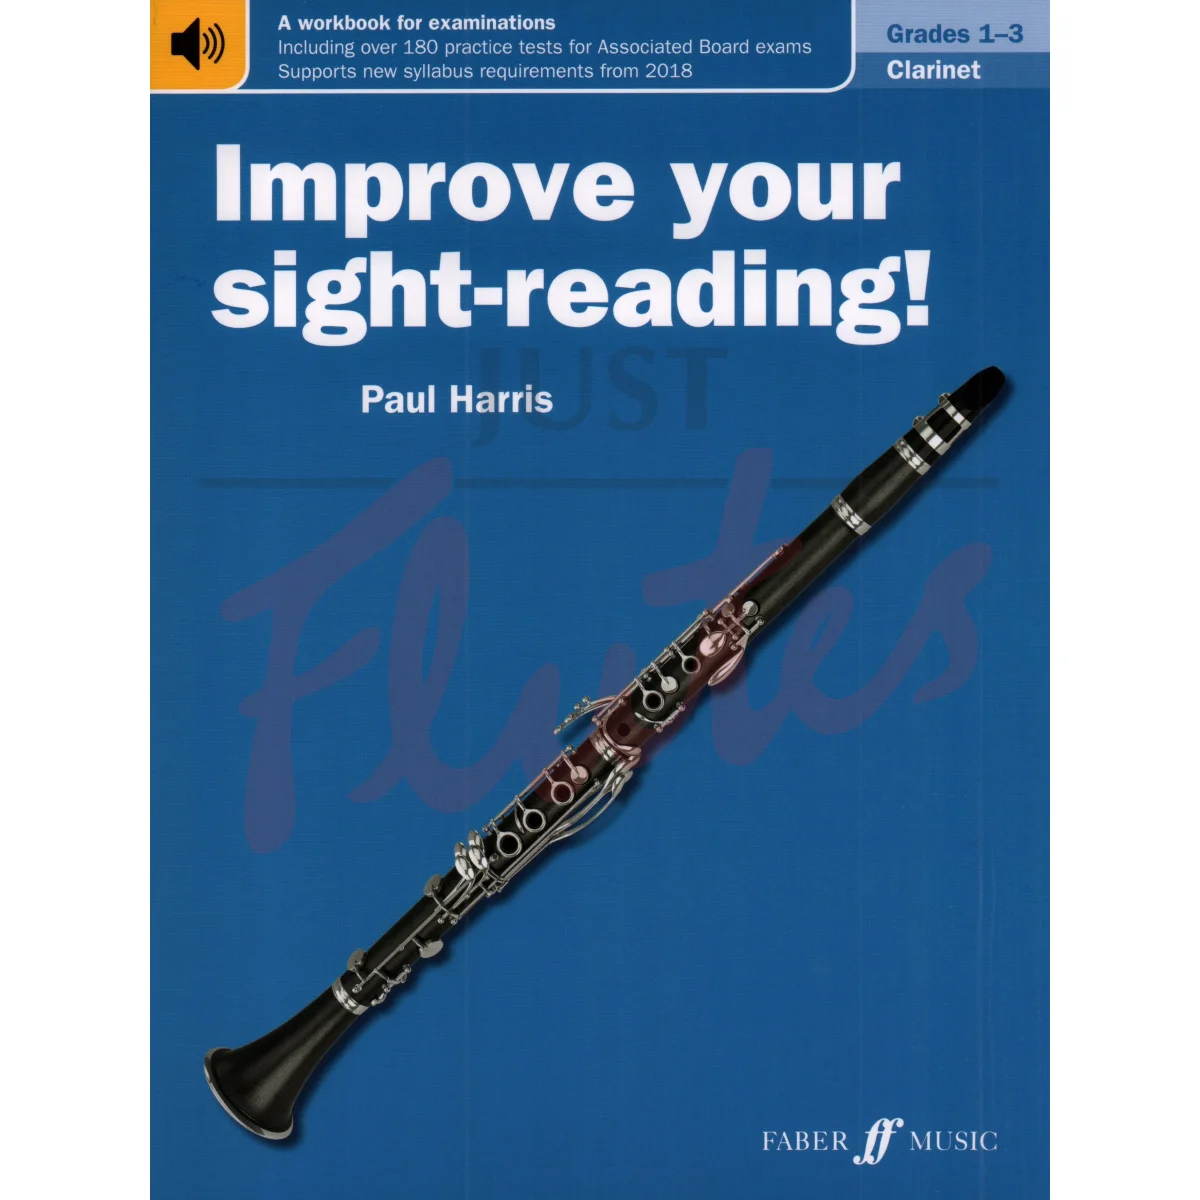 Improve Your Sight-Reading! [Clarinet] Grades 1-3